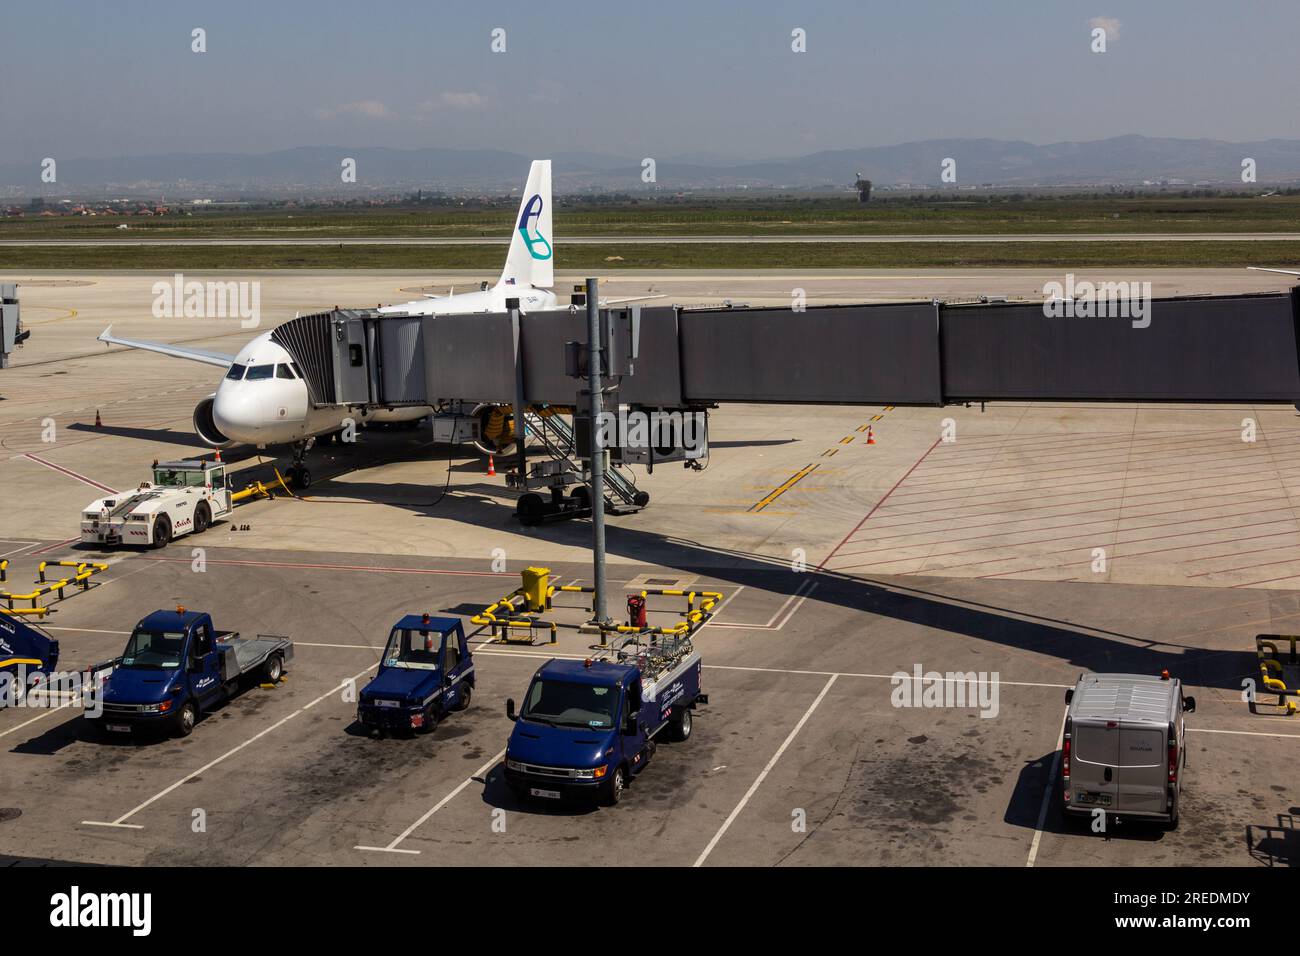 PRISTINA, KOSOVO - 14. AUGUST 2019: Flugzeug am internationalen Flughafen Prishtina, Kosovo Stockfoto